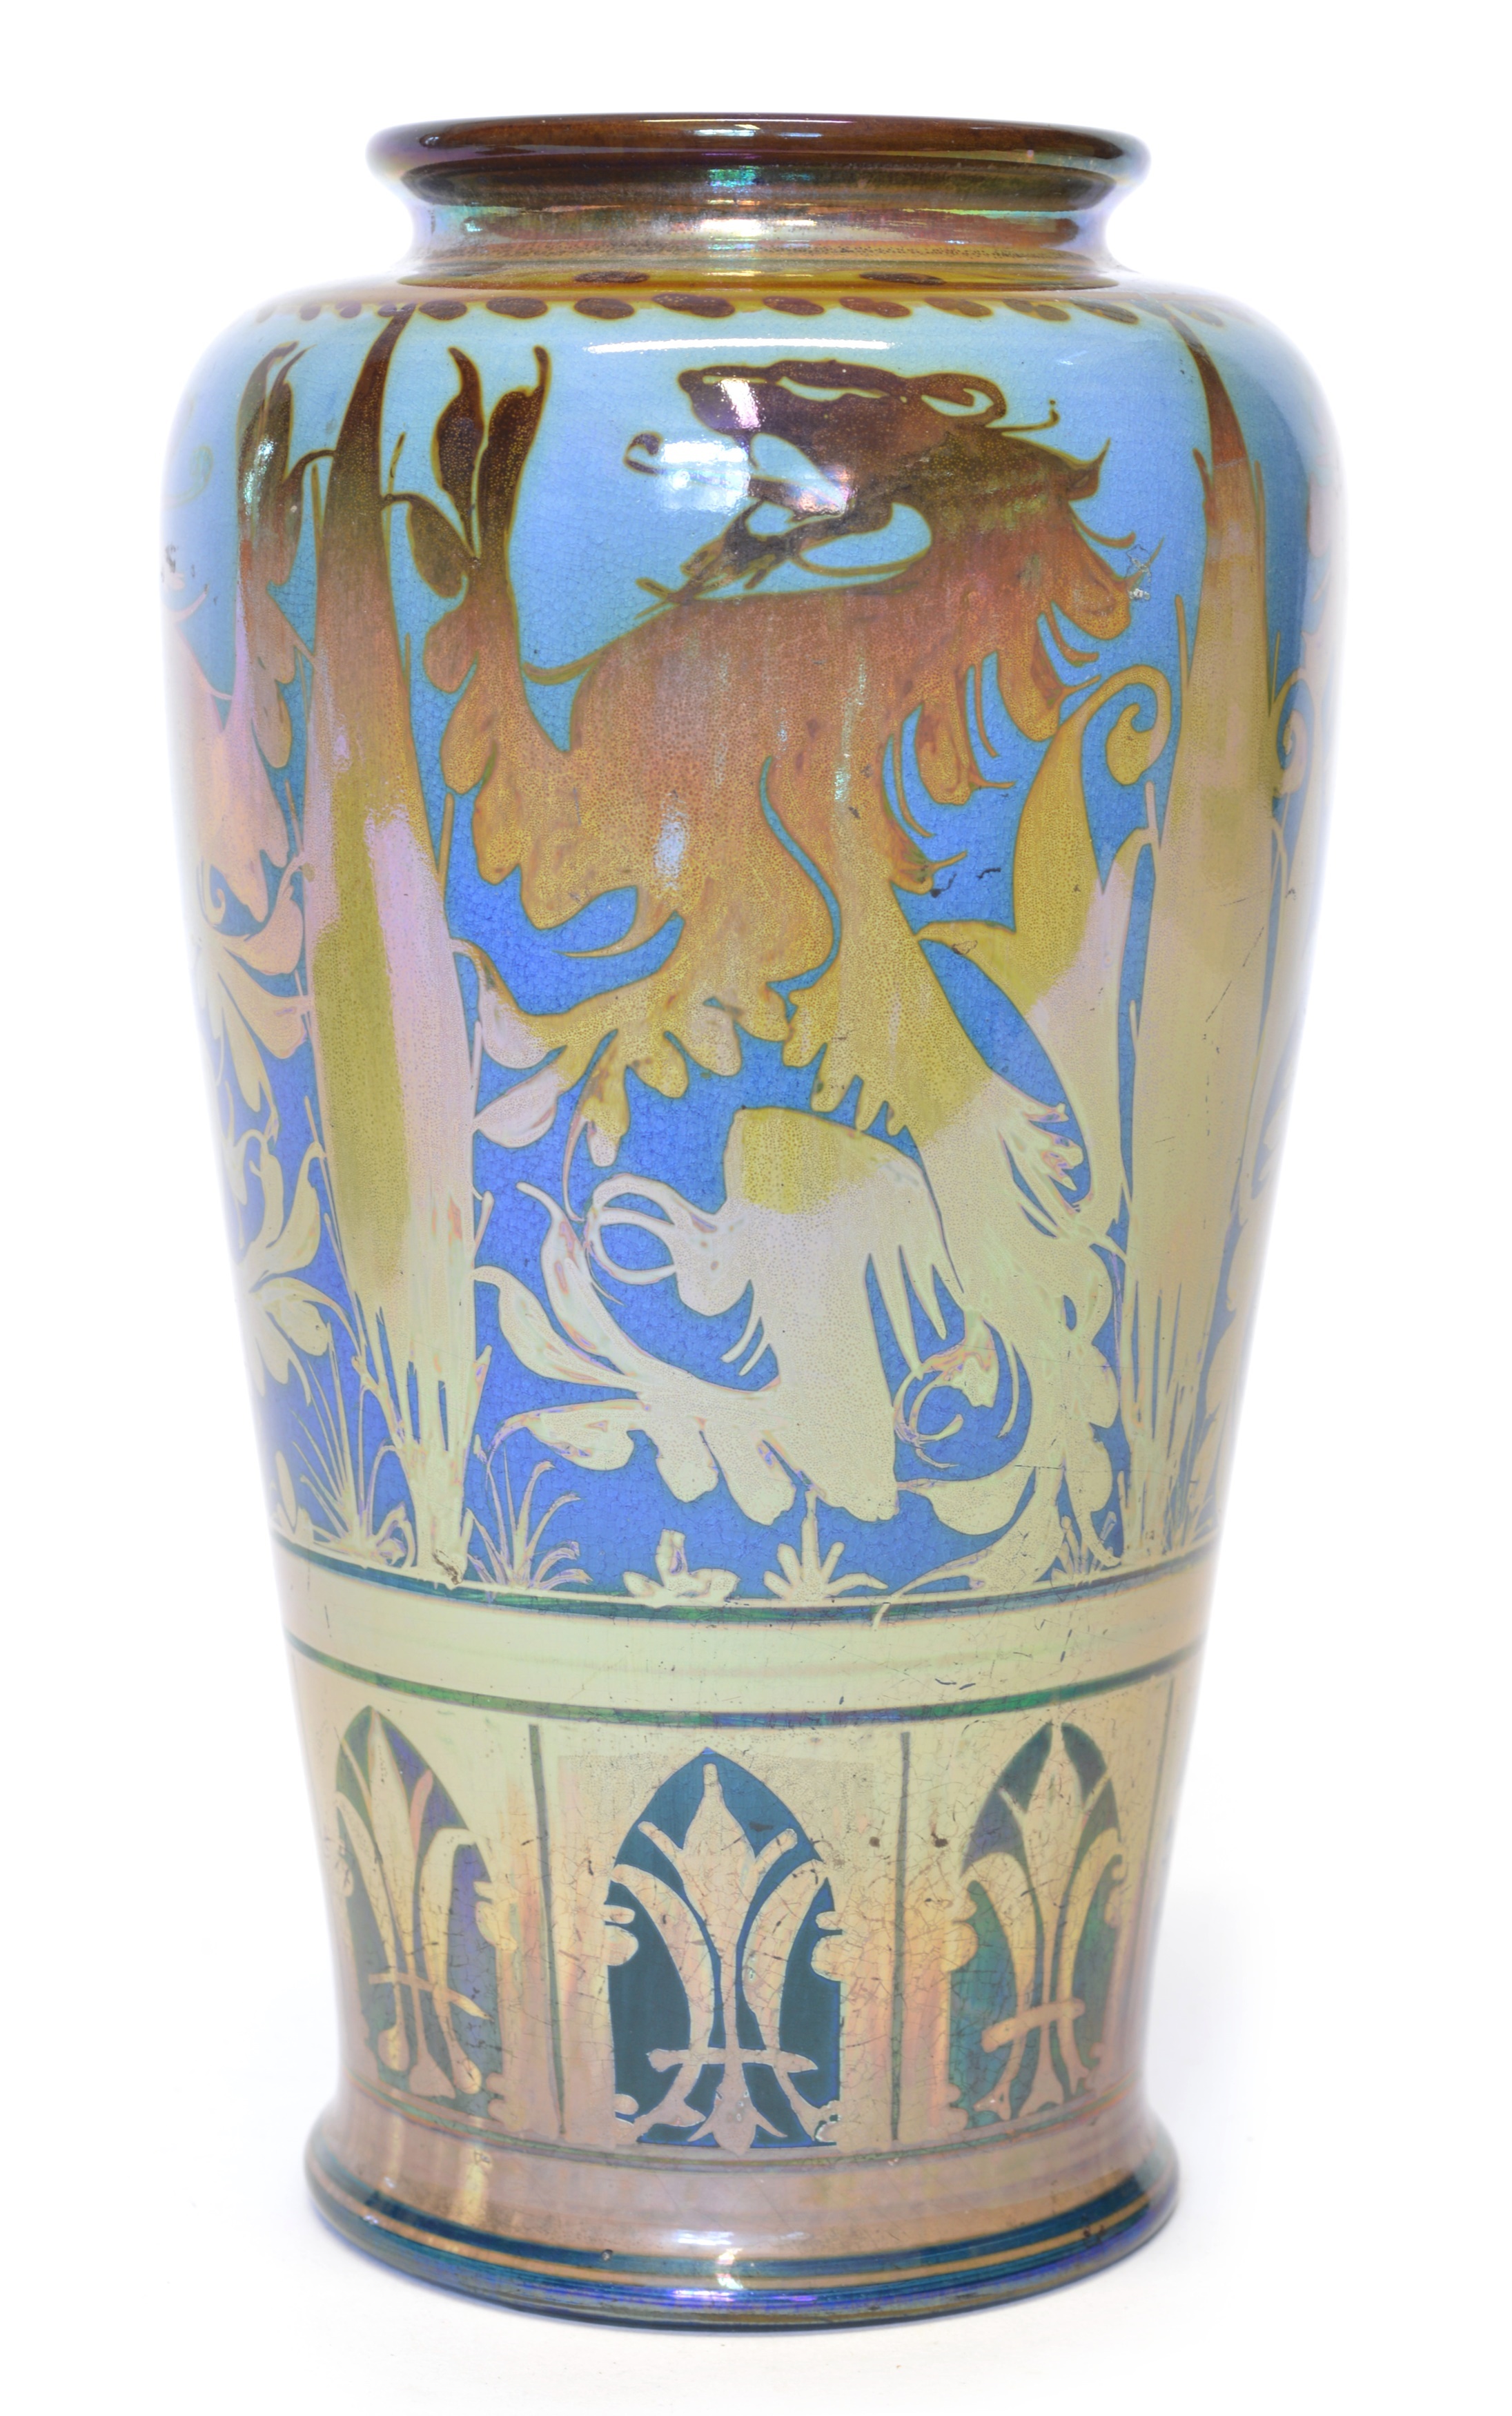 Pilkington's Royal Lancastrian lustre vase, decorated by Gordon M. Forsyth (1879 - 1952)